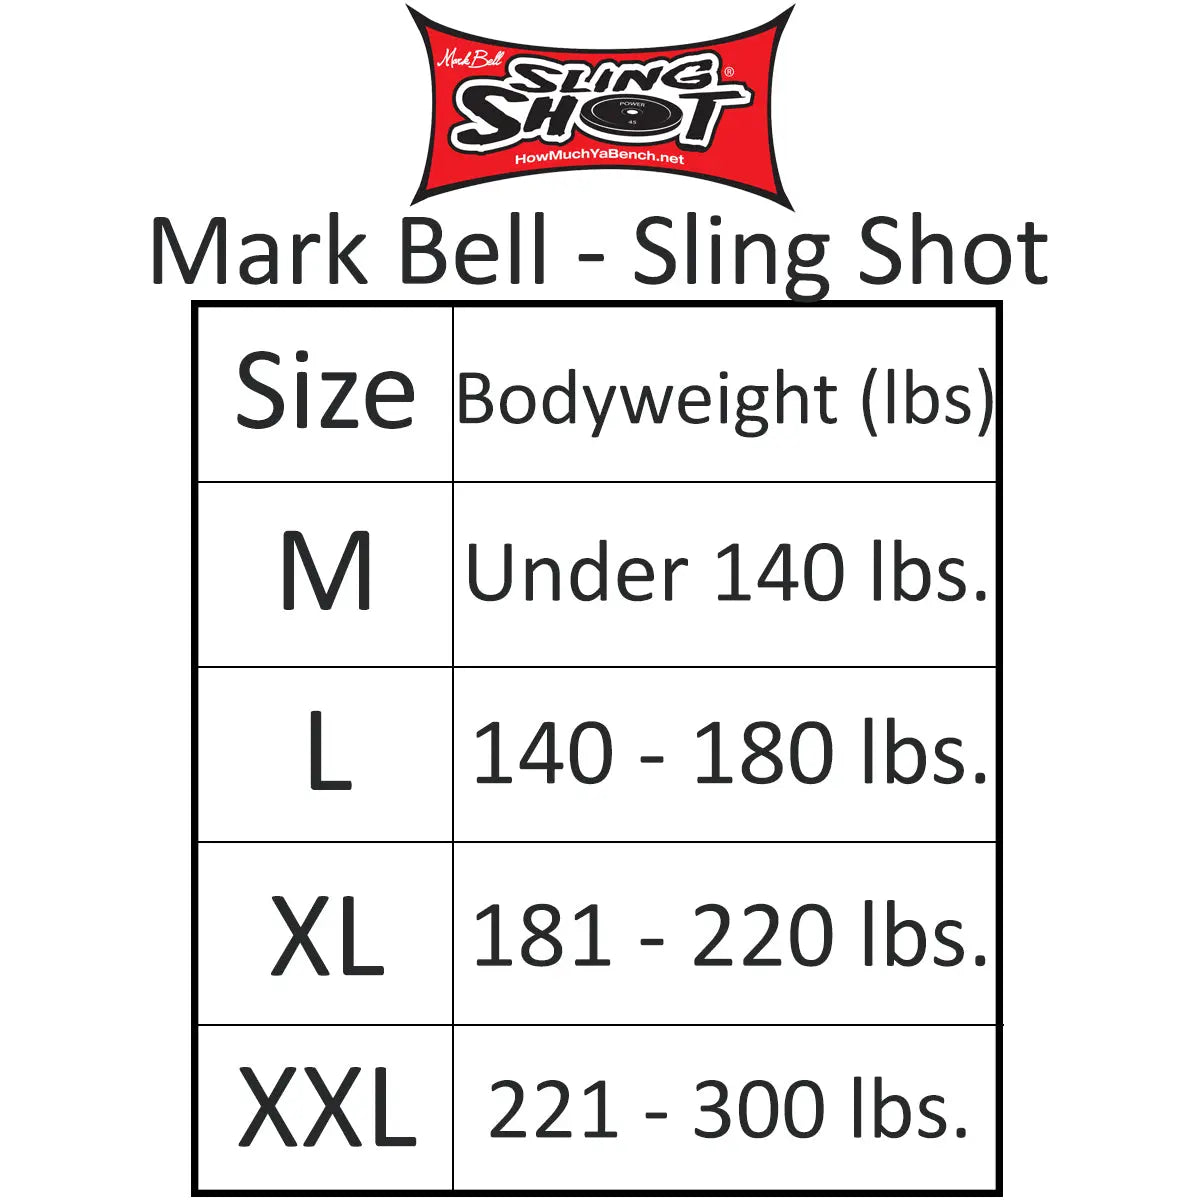 Sling Shot Original Power Lifting Band by Mark Bell, Red Sling Shot